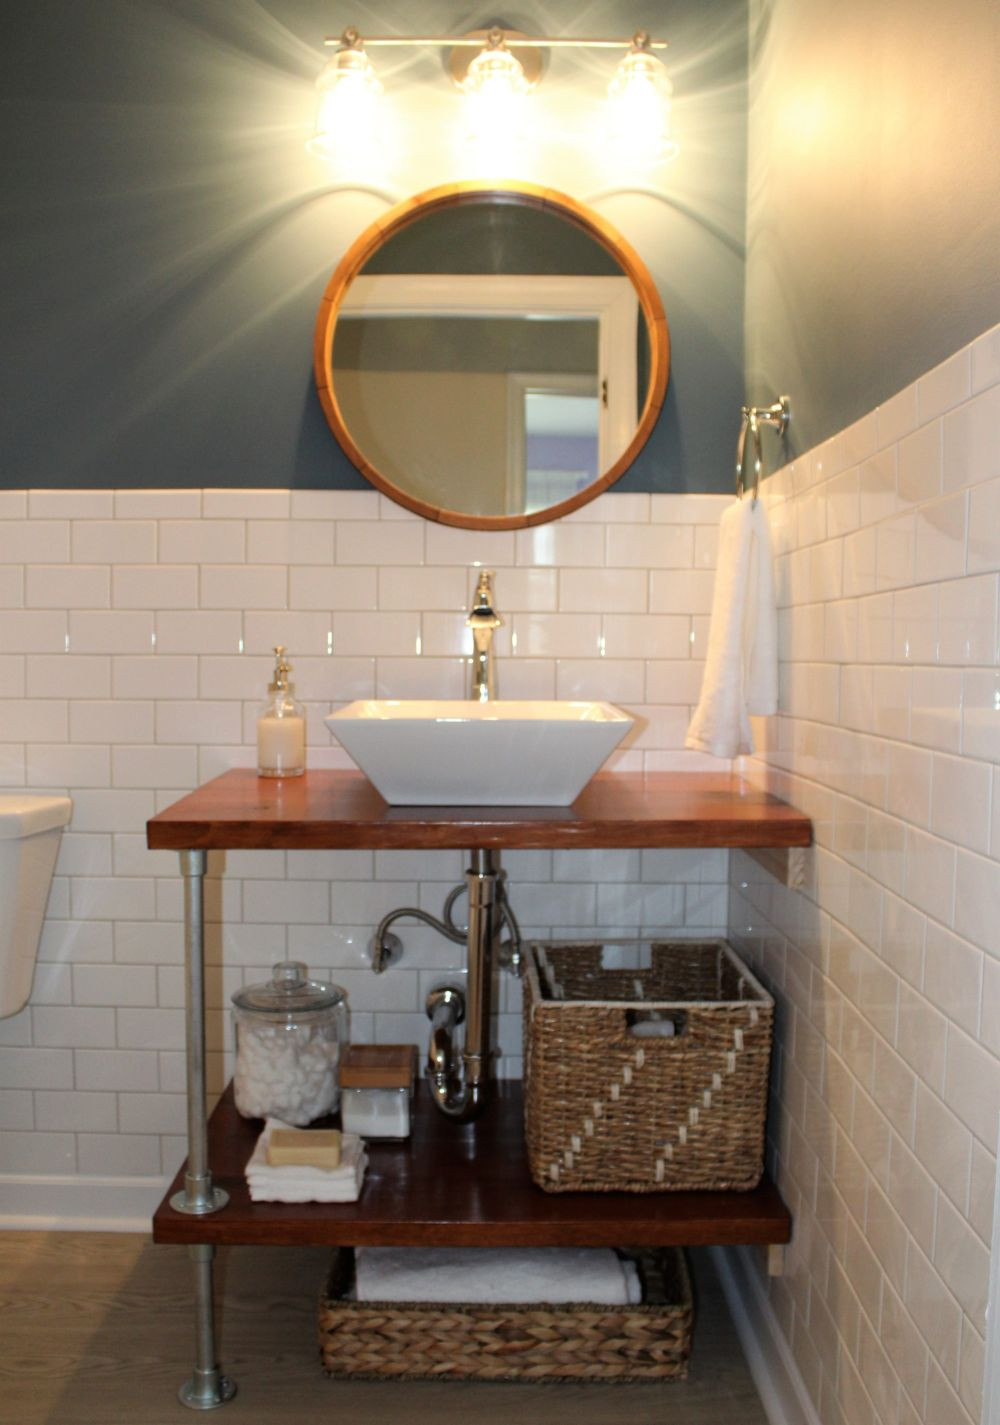 Best ideas about Bathroom Vanity DIY
. Save or Pin DIY Bathroom Vanity Ideas Perfect For Repurposers Now.